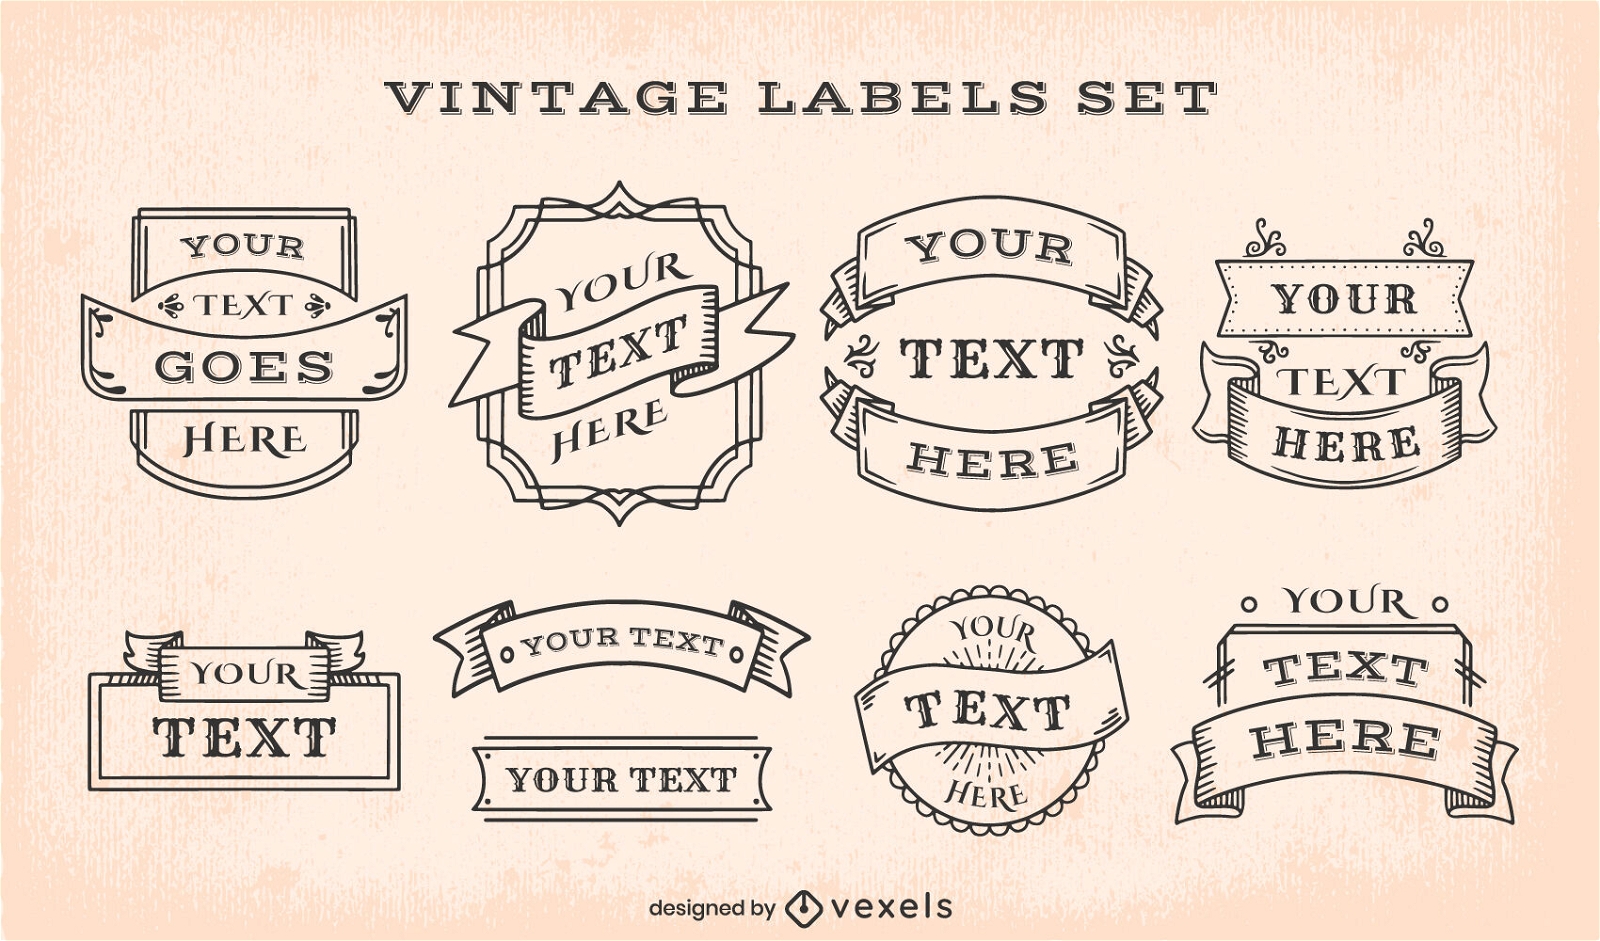 Fitas vintage personalizáveis e conjunto de etiquetas